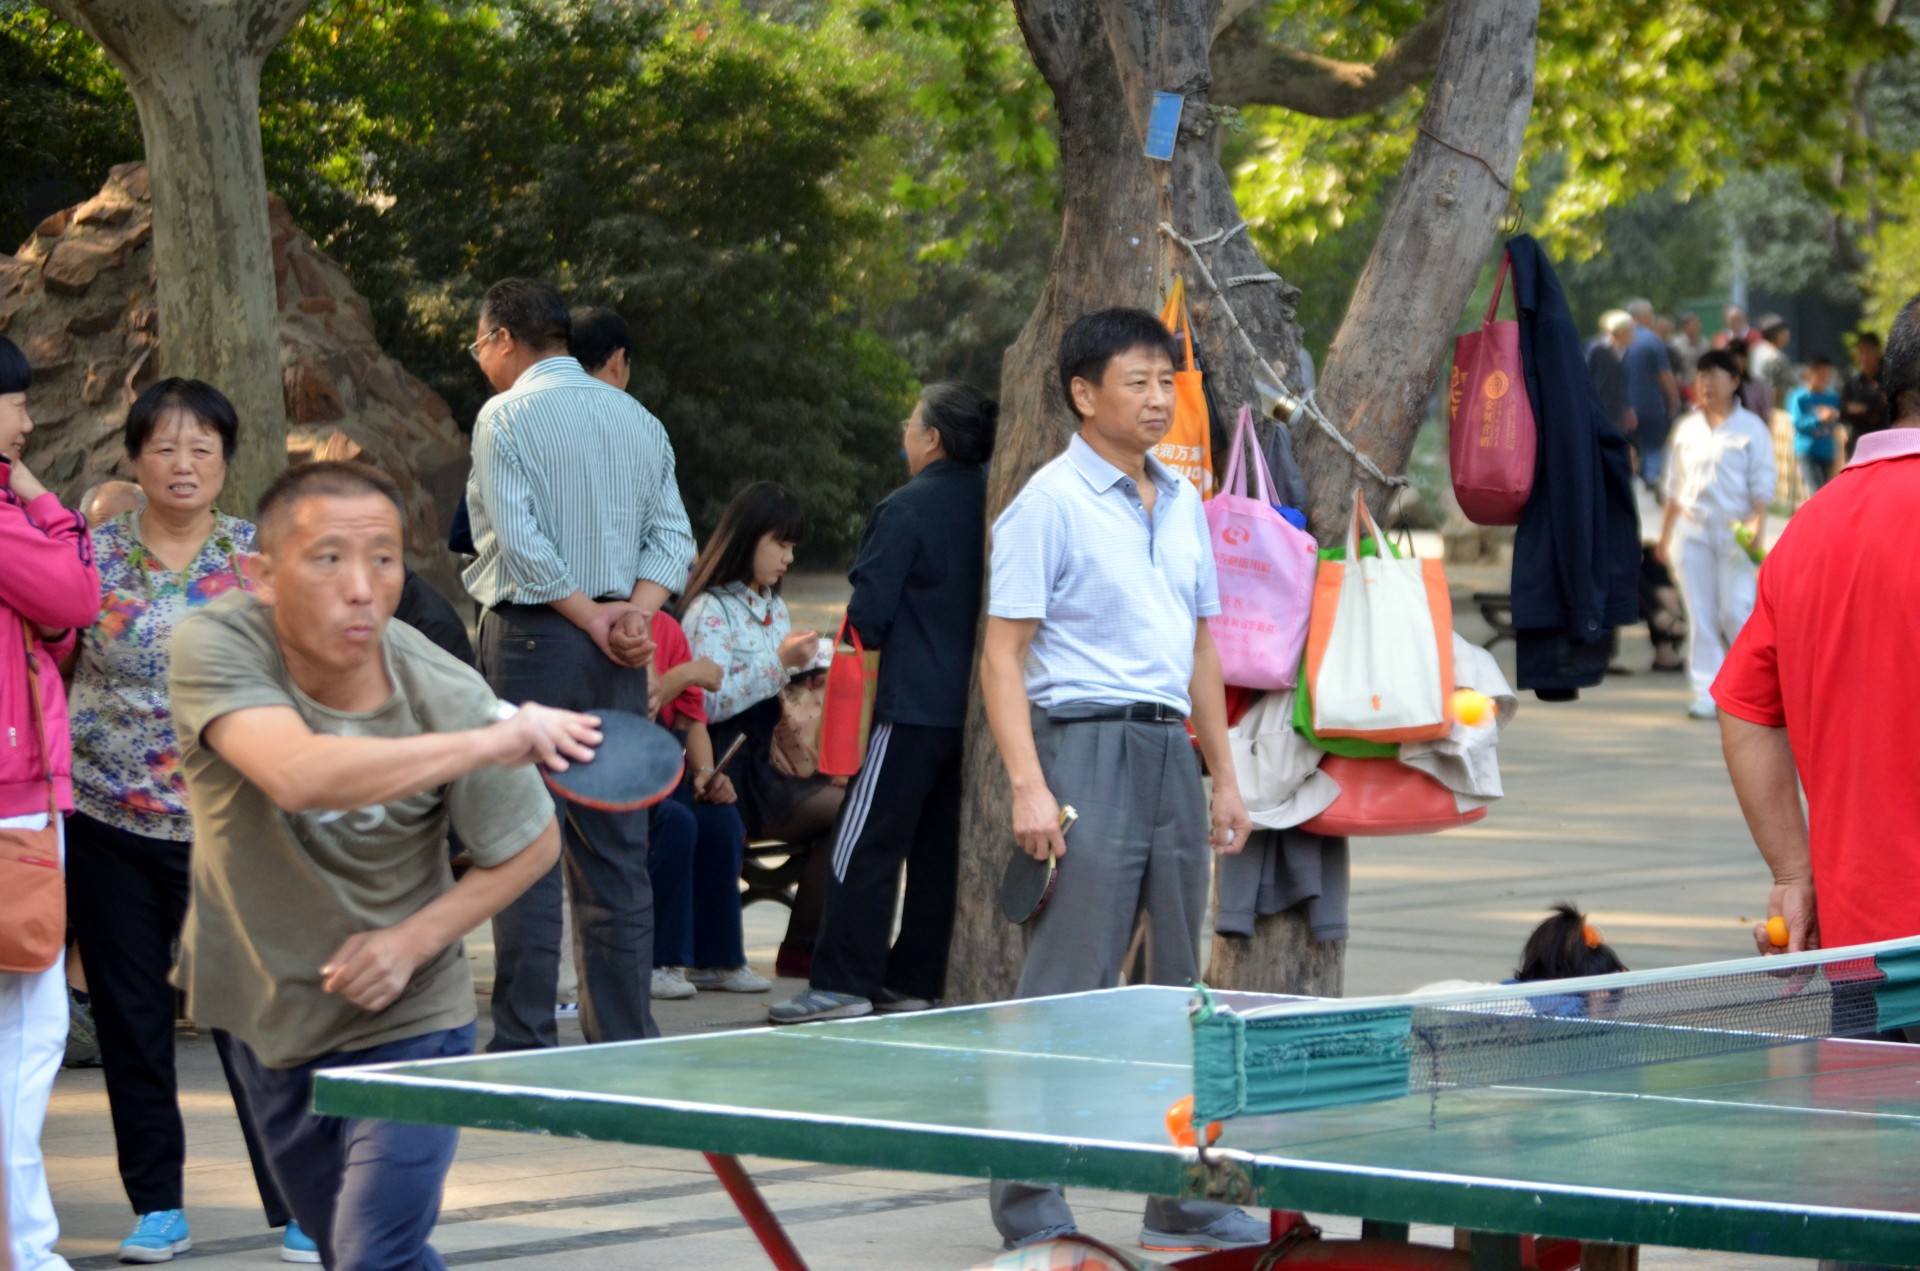 ping pong sports follow through free photo